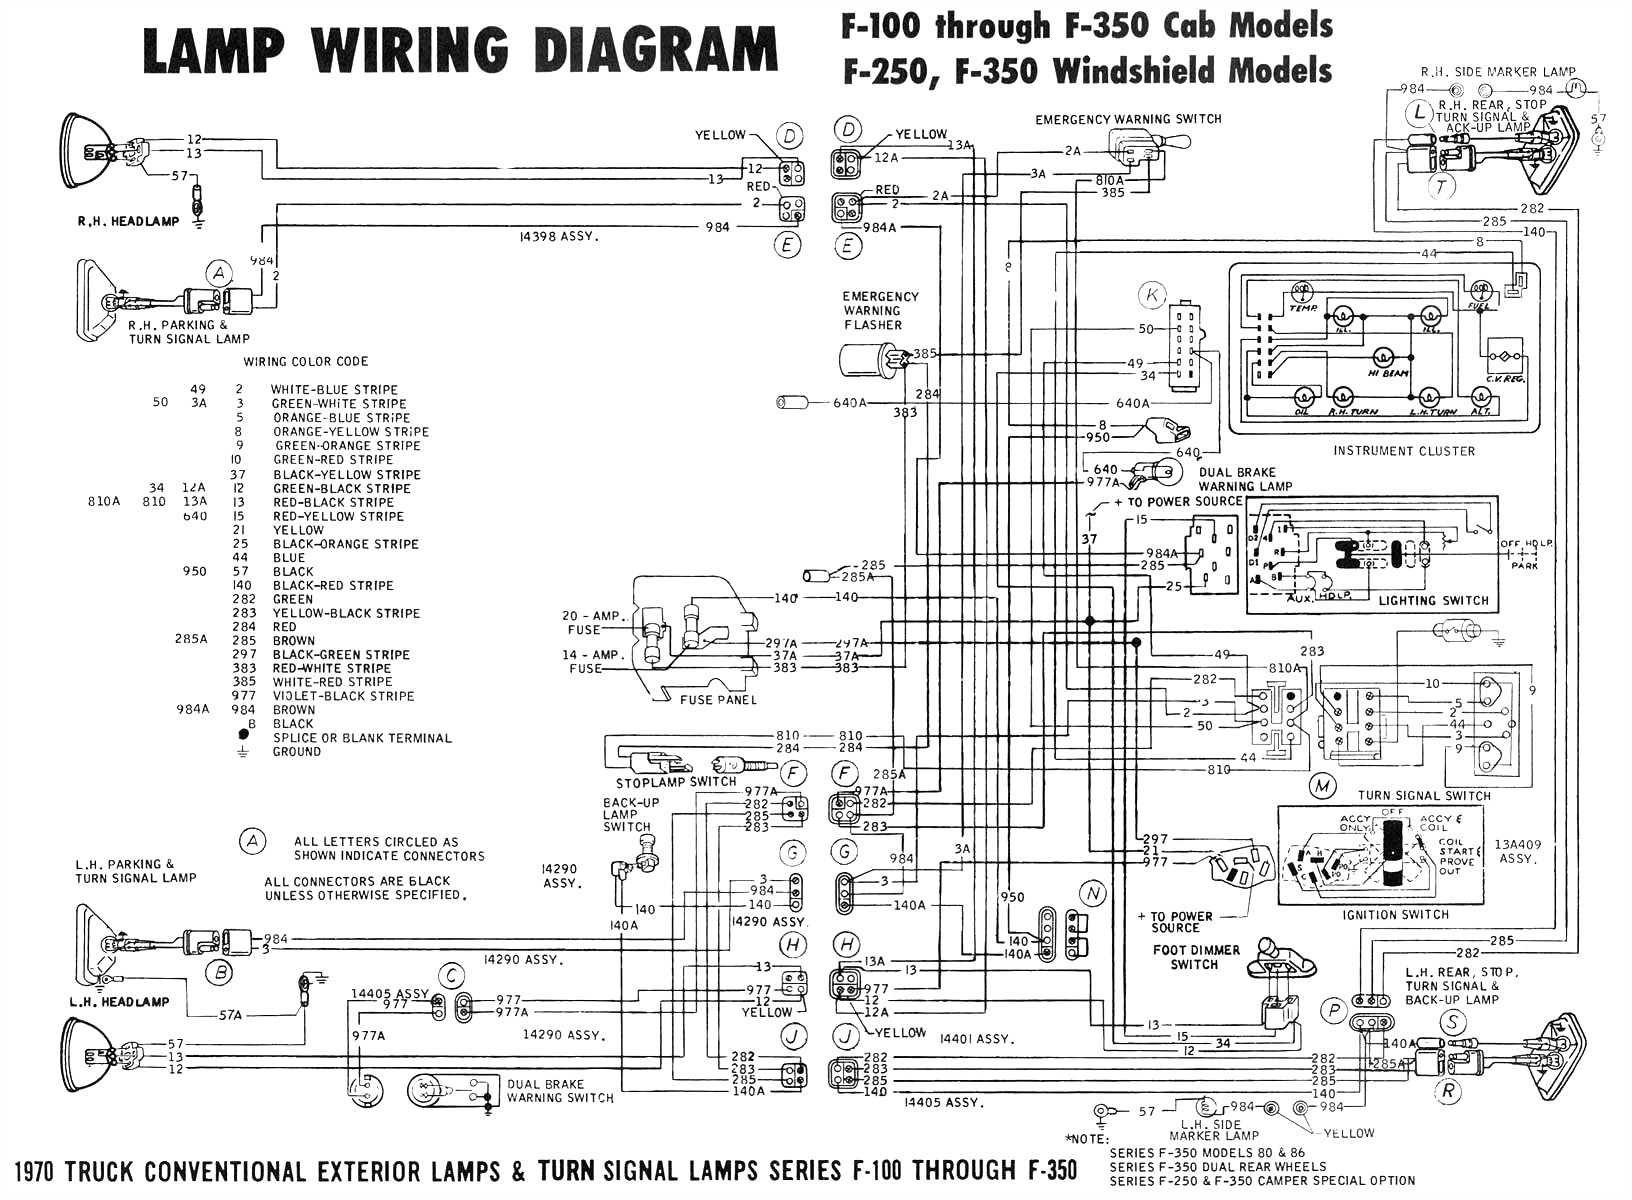 2004 ford Explorer Power Window Wiring Diagram Wiring Diagram Furthermore 1996 ford Explorer Power Window Wiring